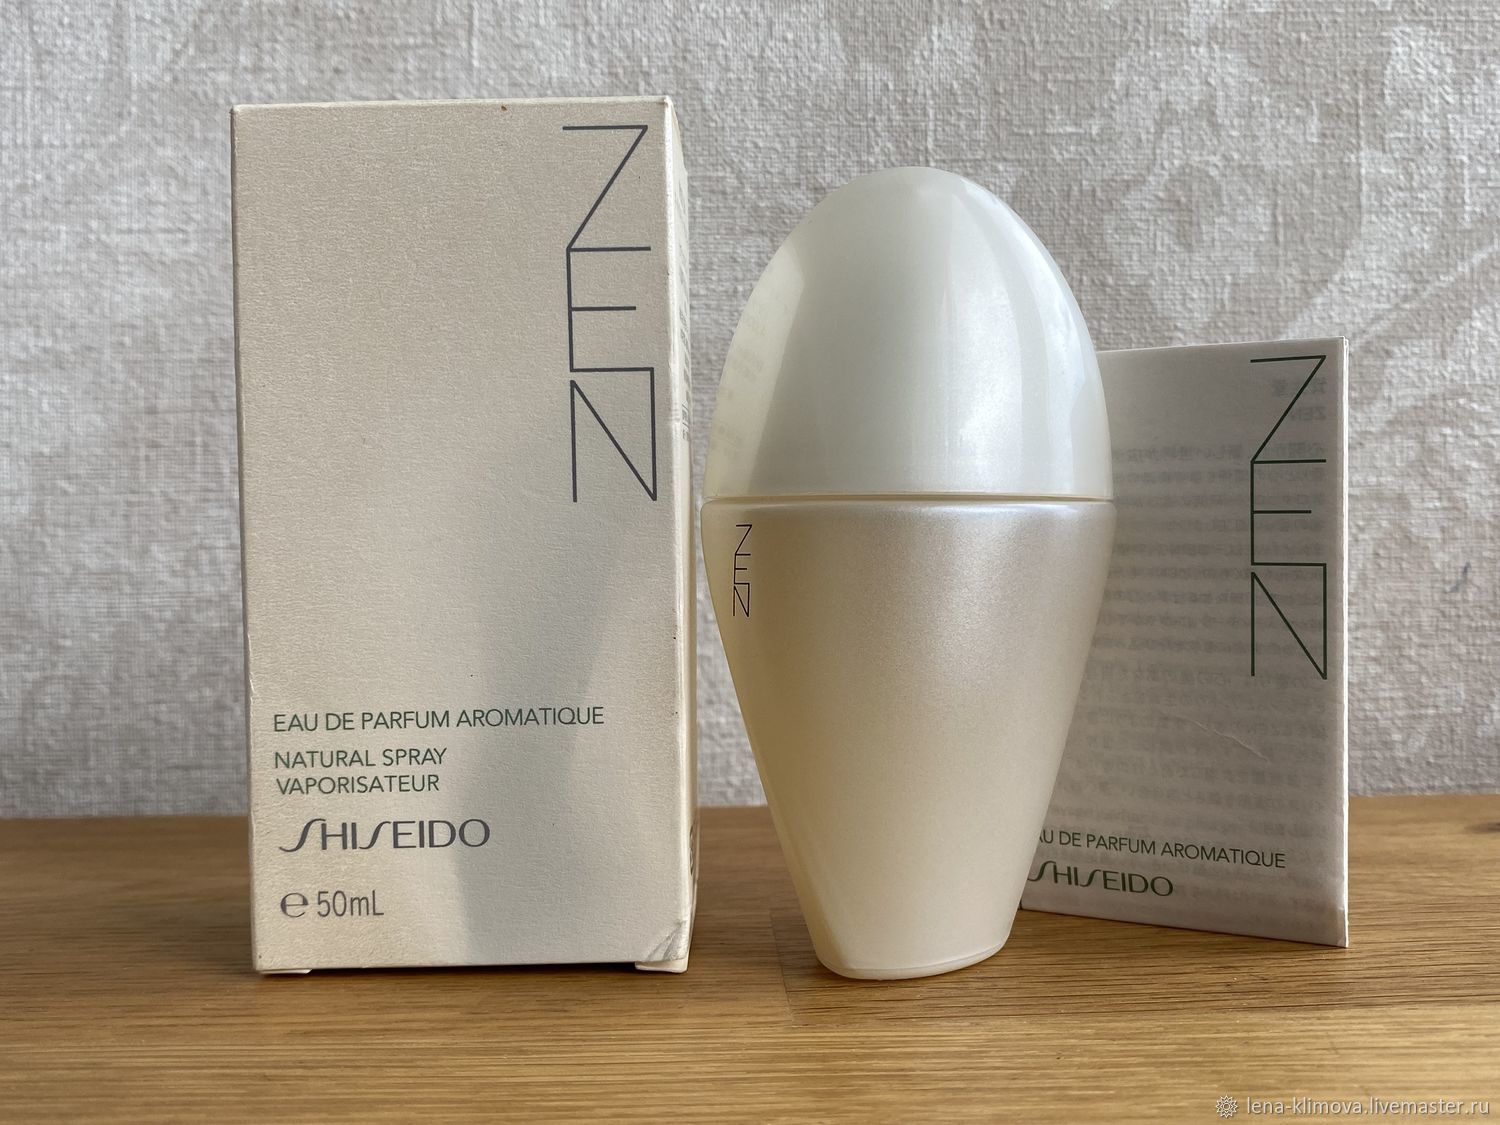 Shiseido 50. Shiseido Zen отливант. Zen Shiseido Eau de Parfum Aromatique в длинном белом флаконе. Шисейдо дзен Фрагрантика. Шисейдо Зен реклама.